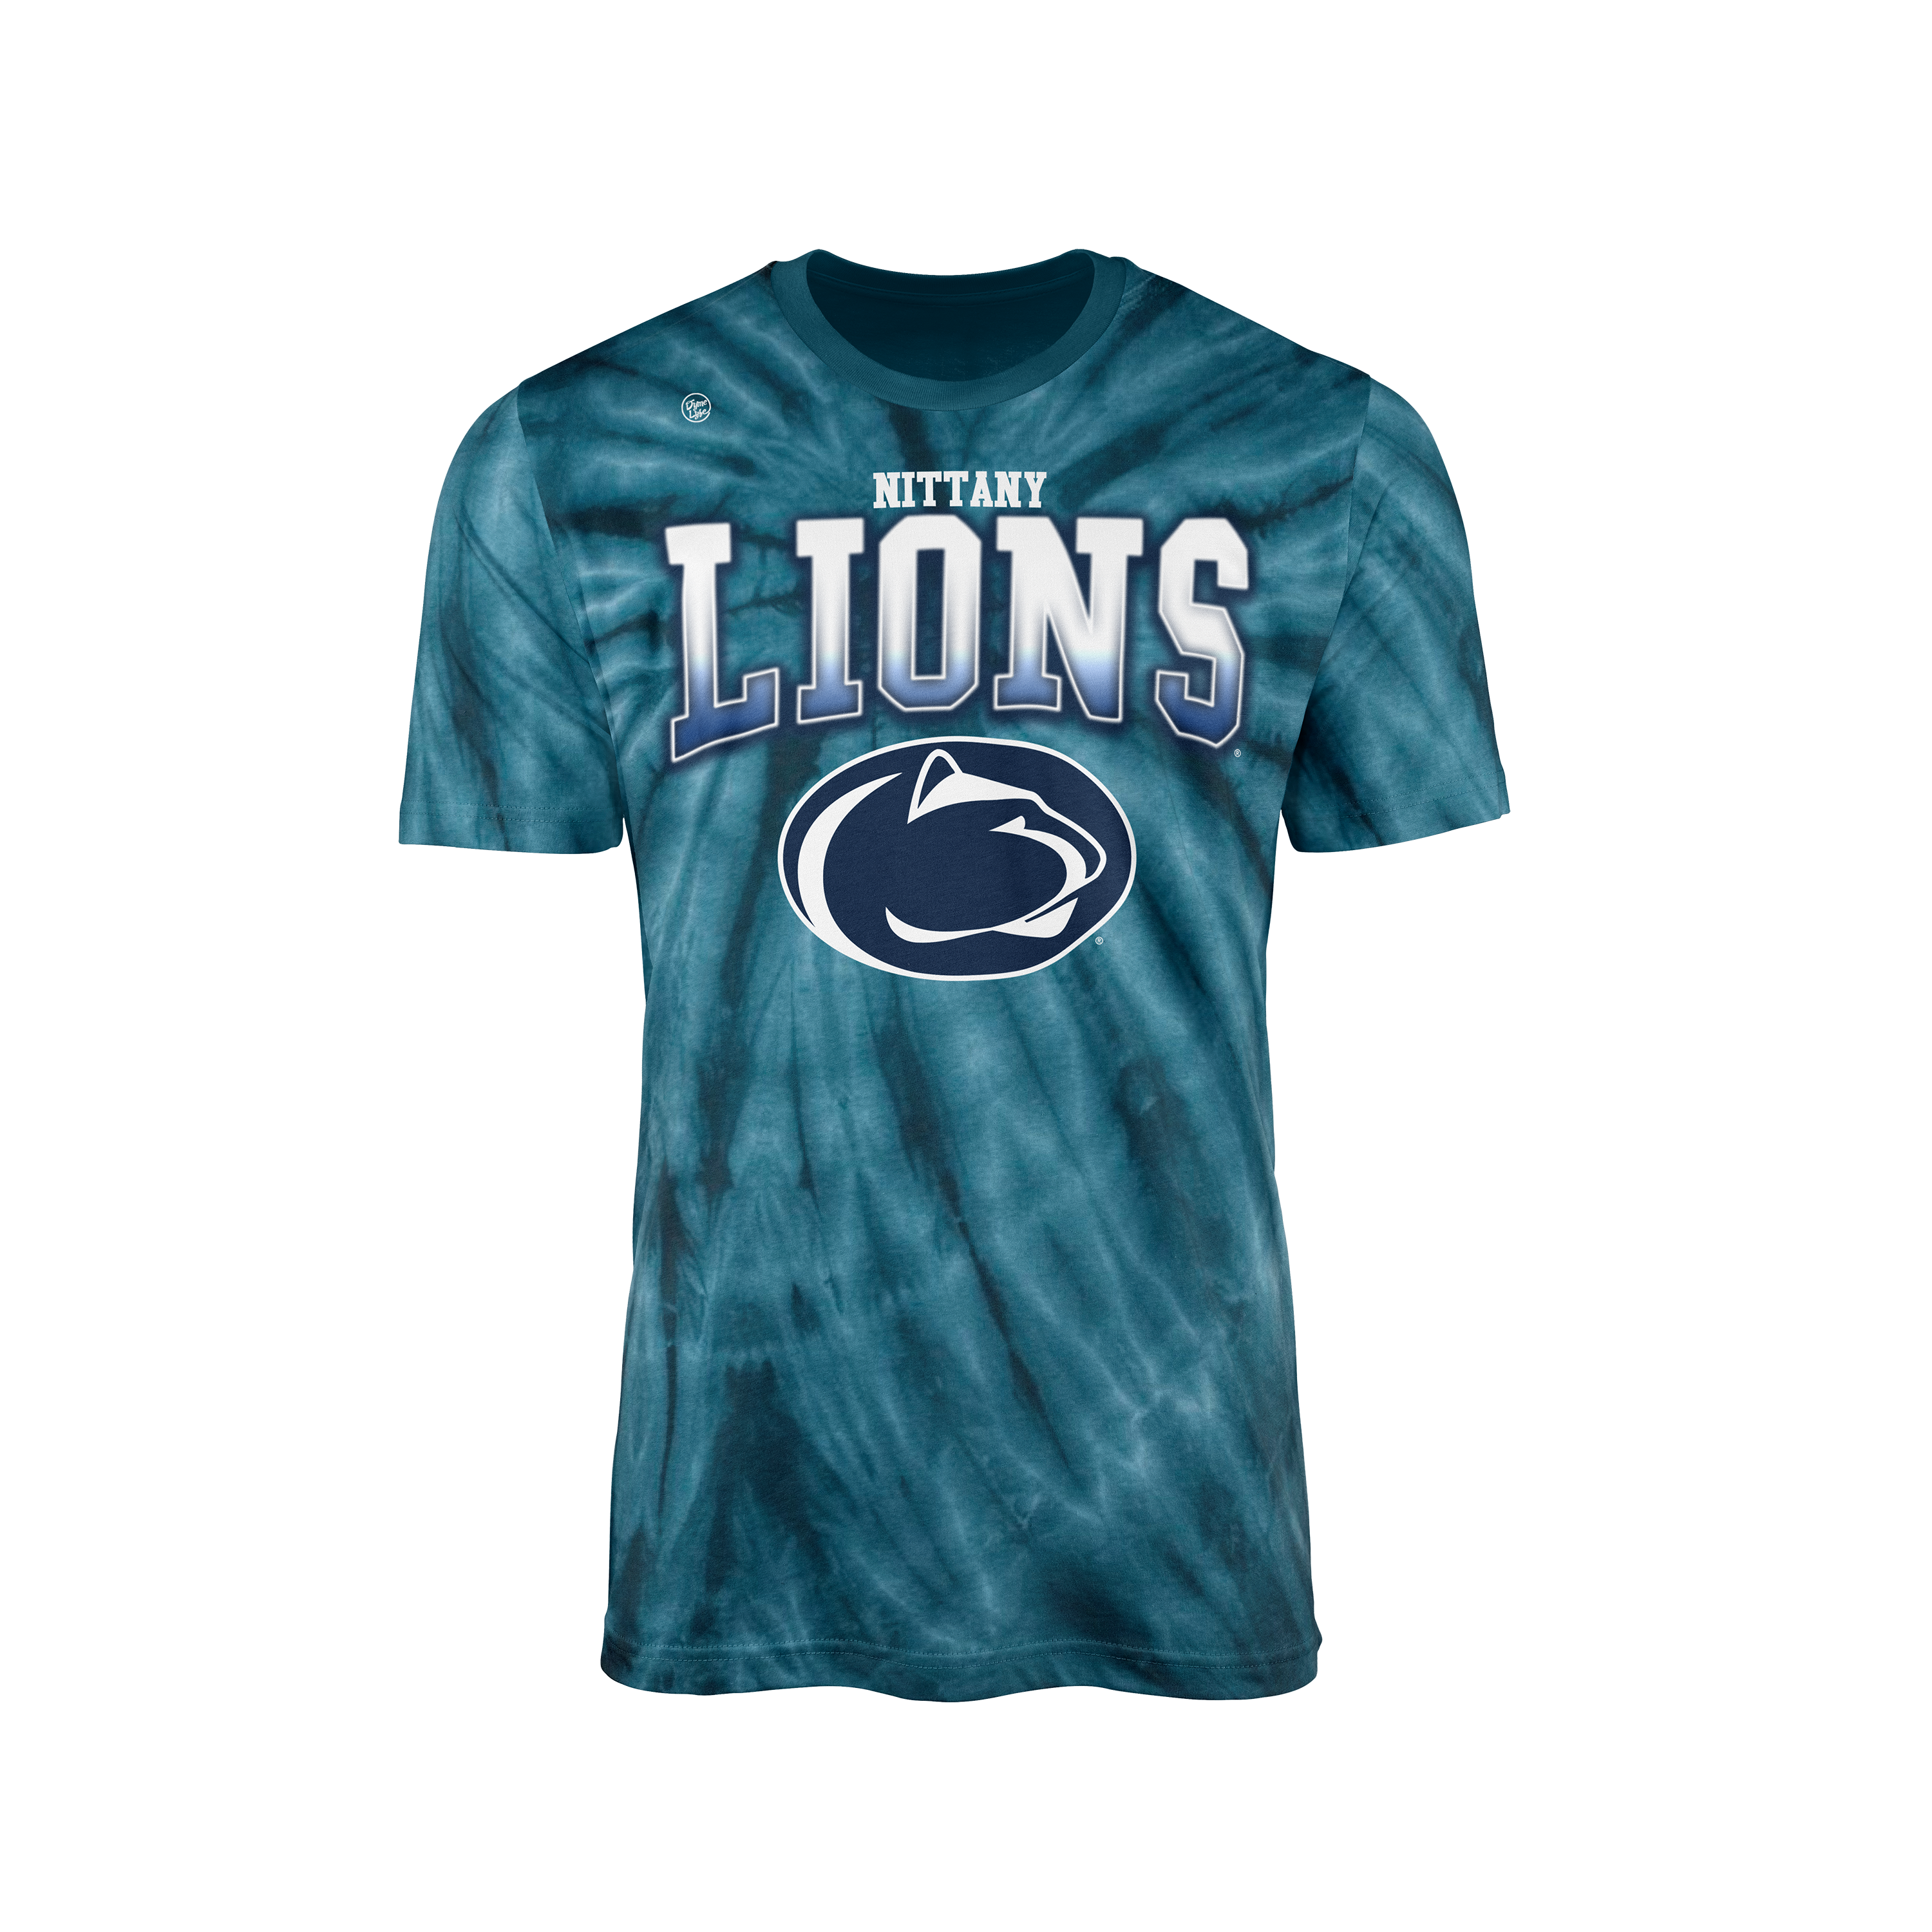 Penn State Nittany Lions Men’s Tie Dye Team Tee